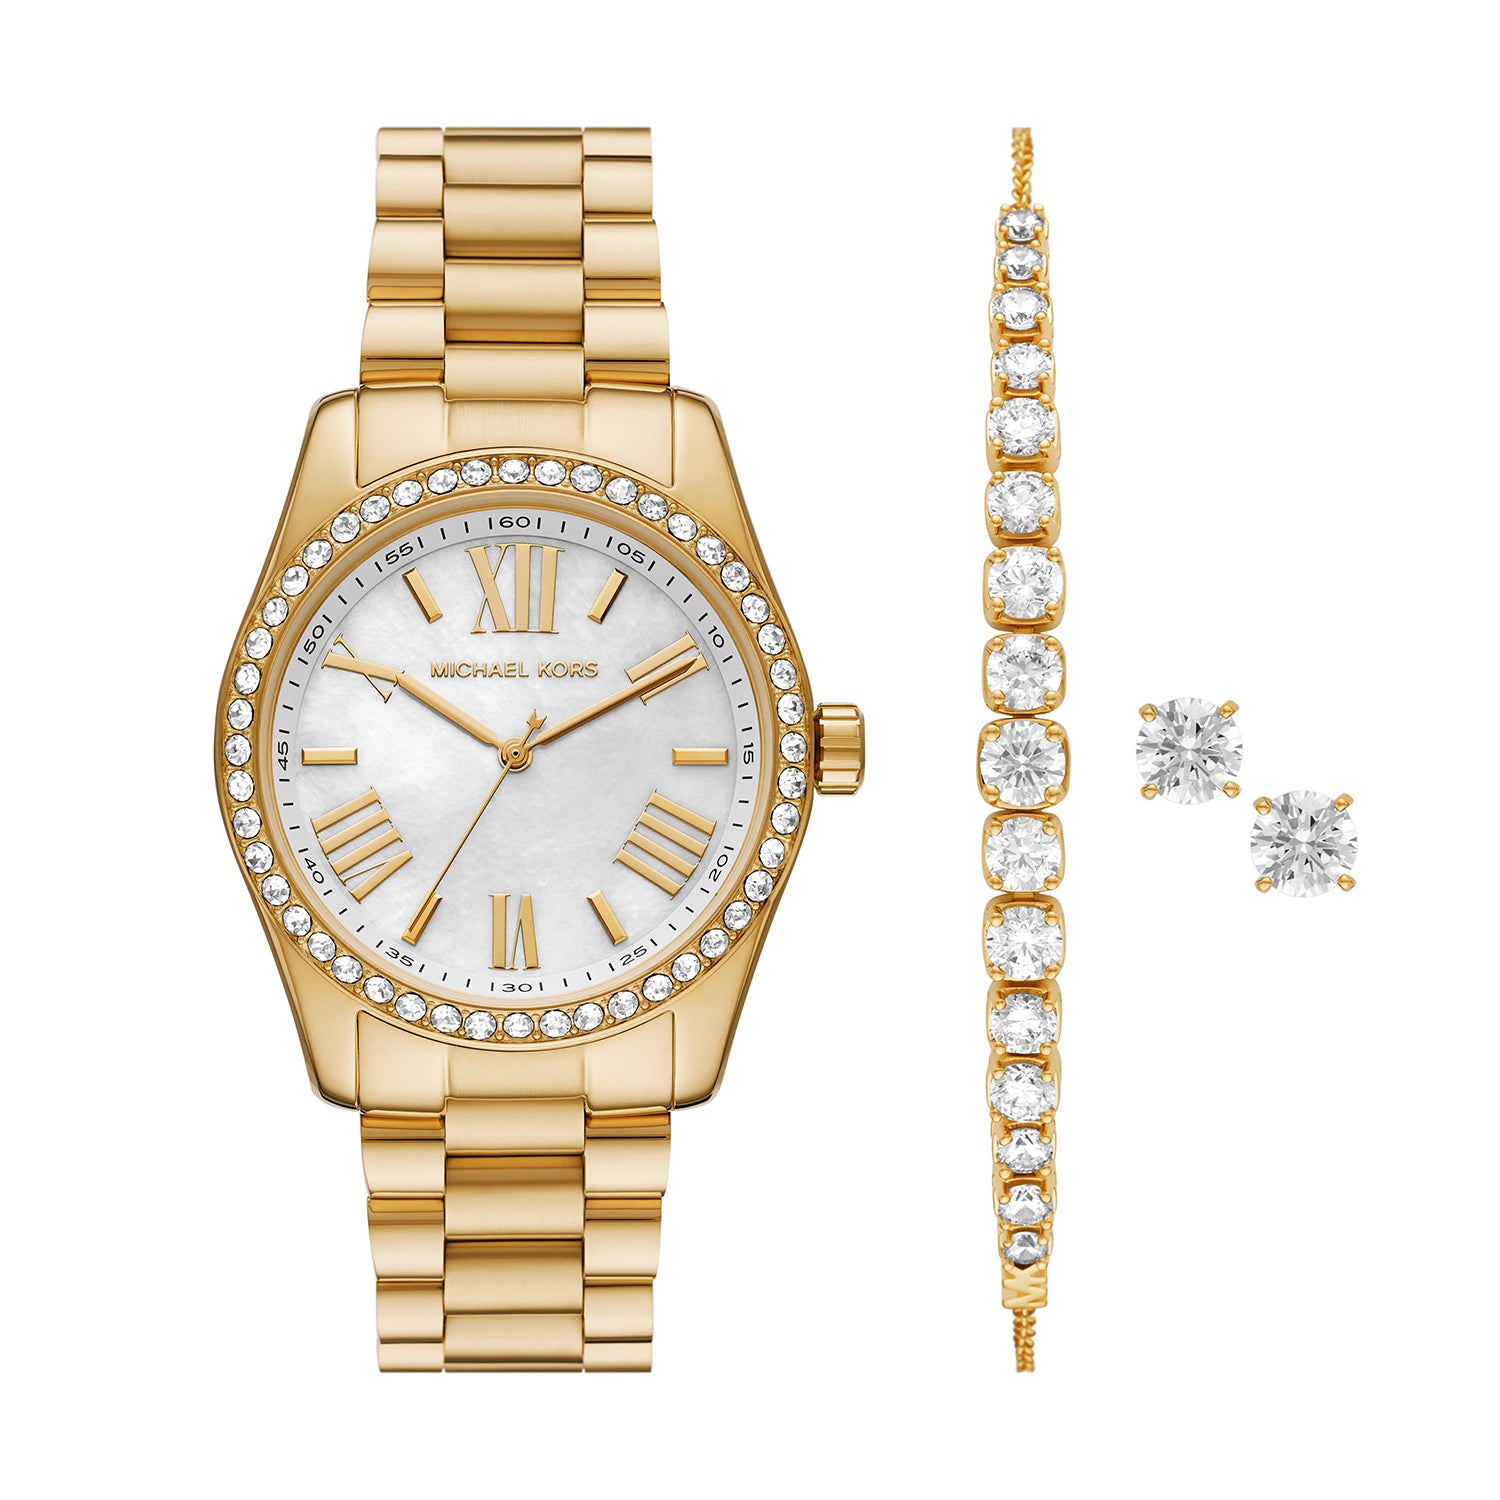 Michael Kors MK8579 Wrist Watch for Men for sale online | eBay